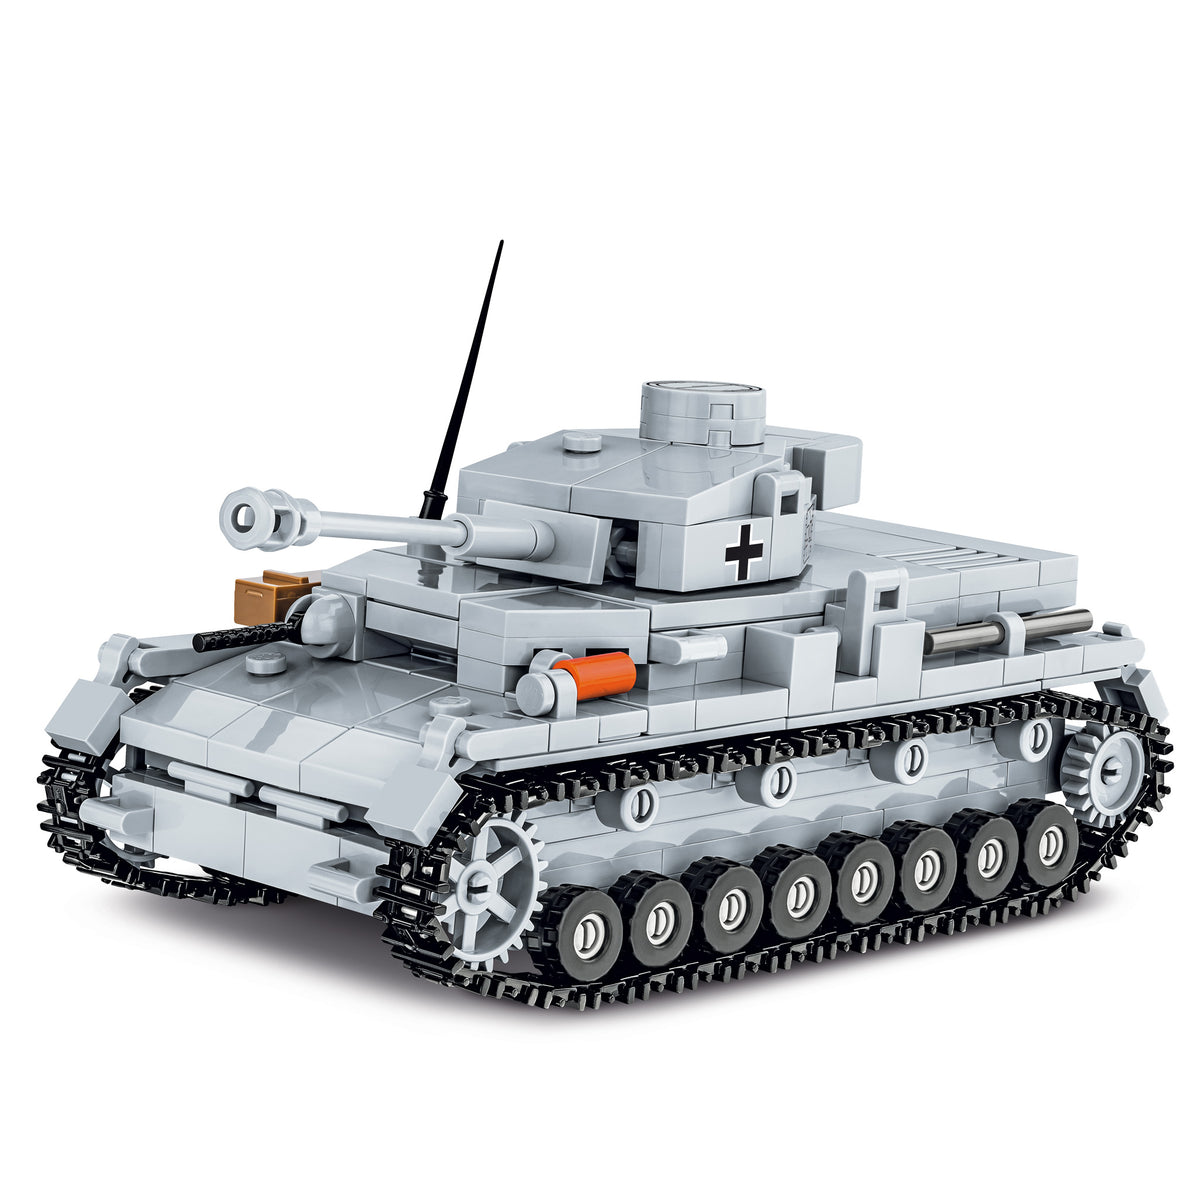 2714 - Panzer IV ausf. G (Cobi)